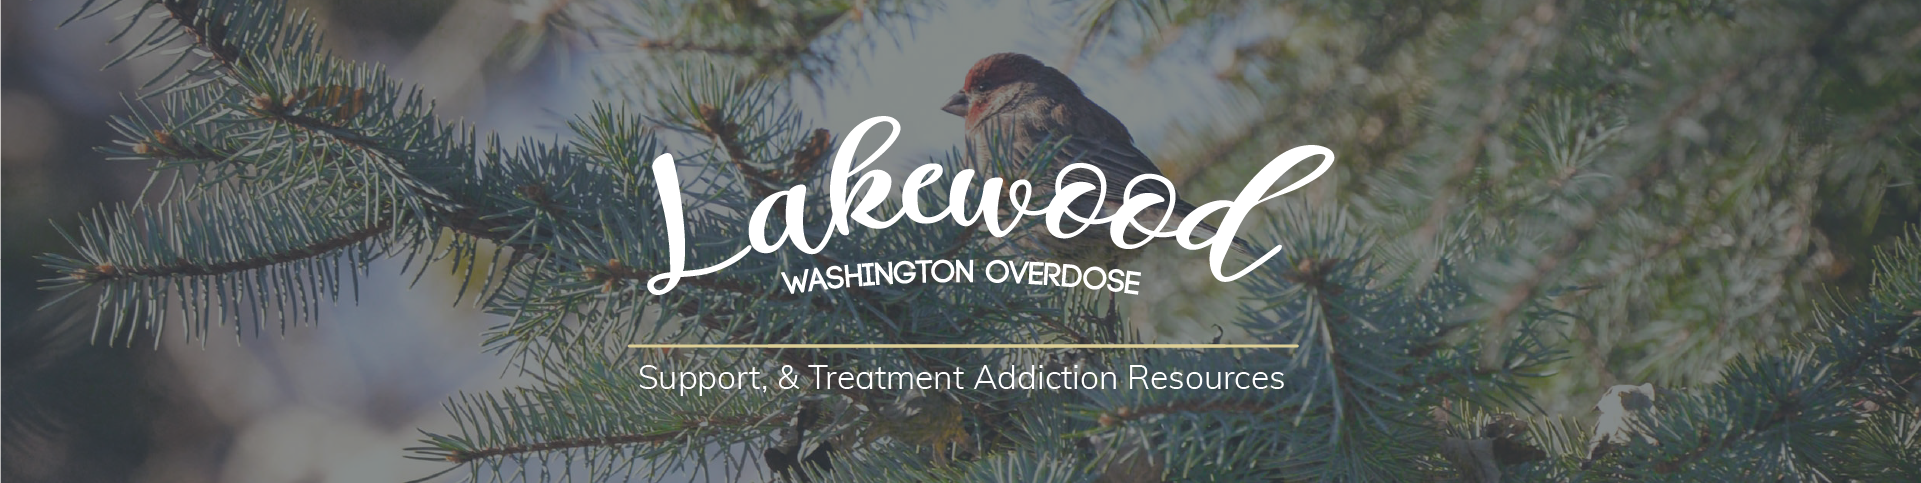 Lakewood washington overdose, support and treatment addiction resources